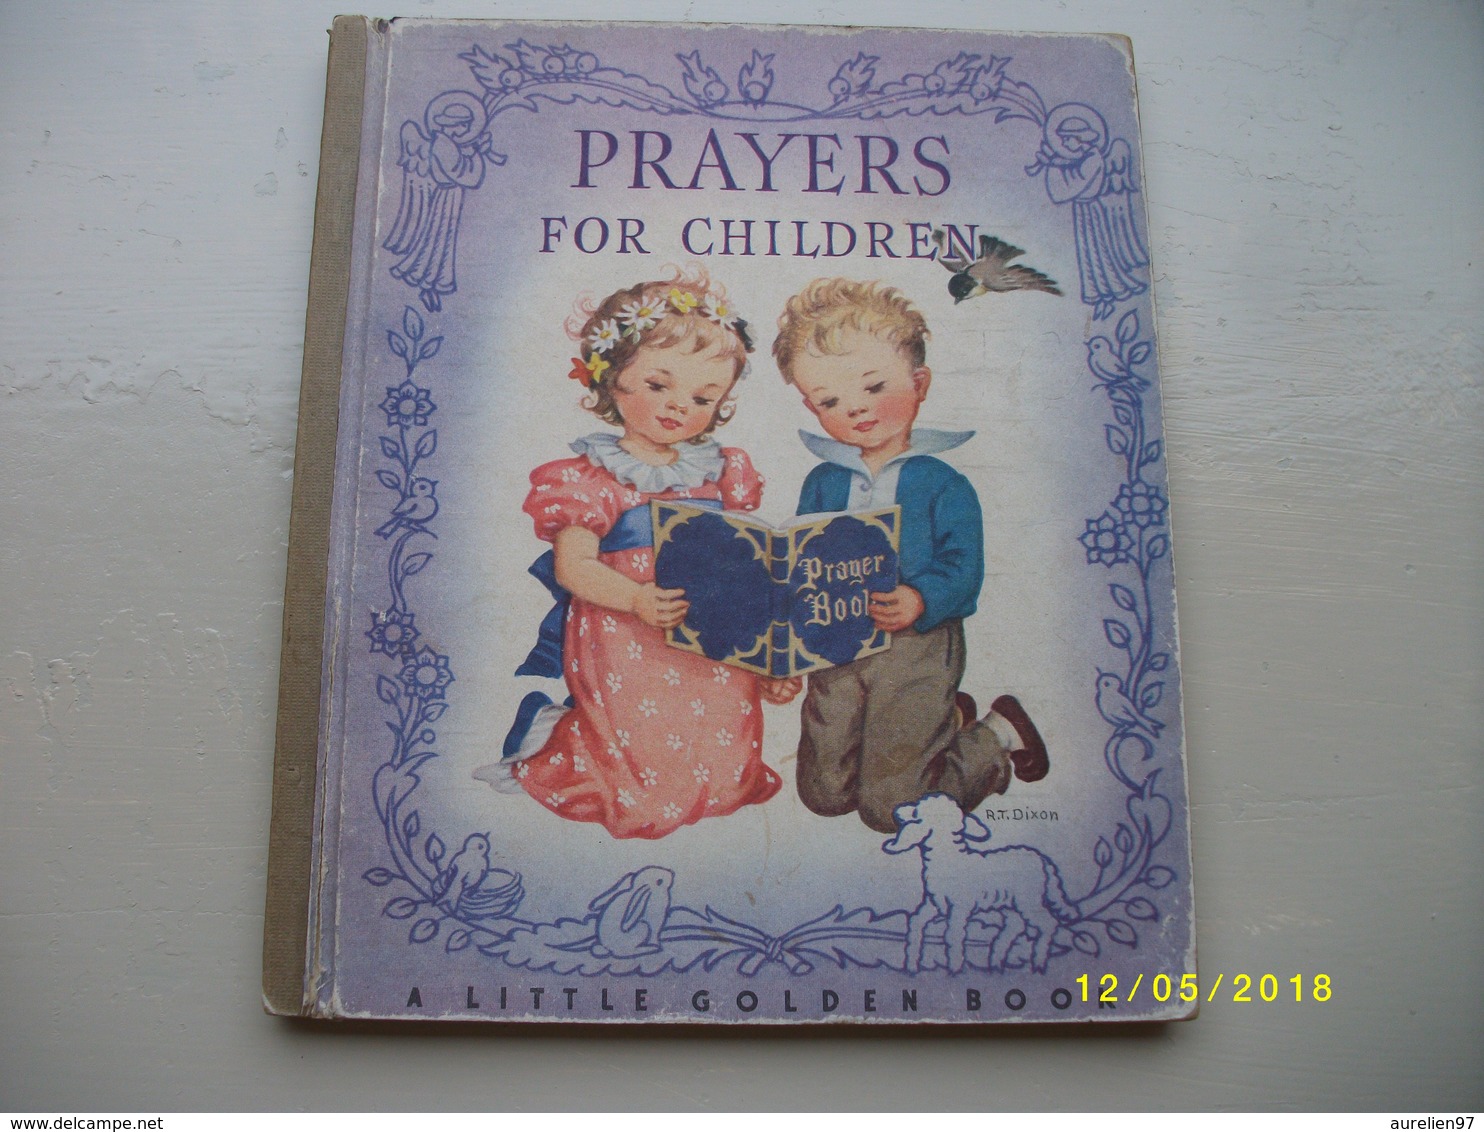 Prayers For Children - Prayerbooks